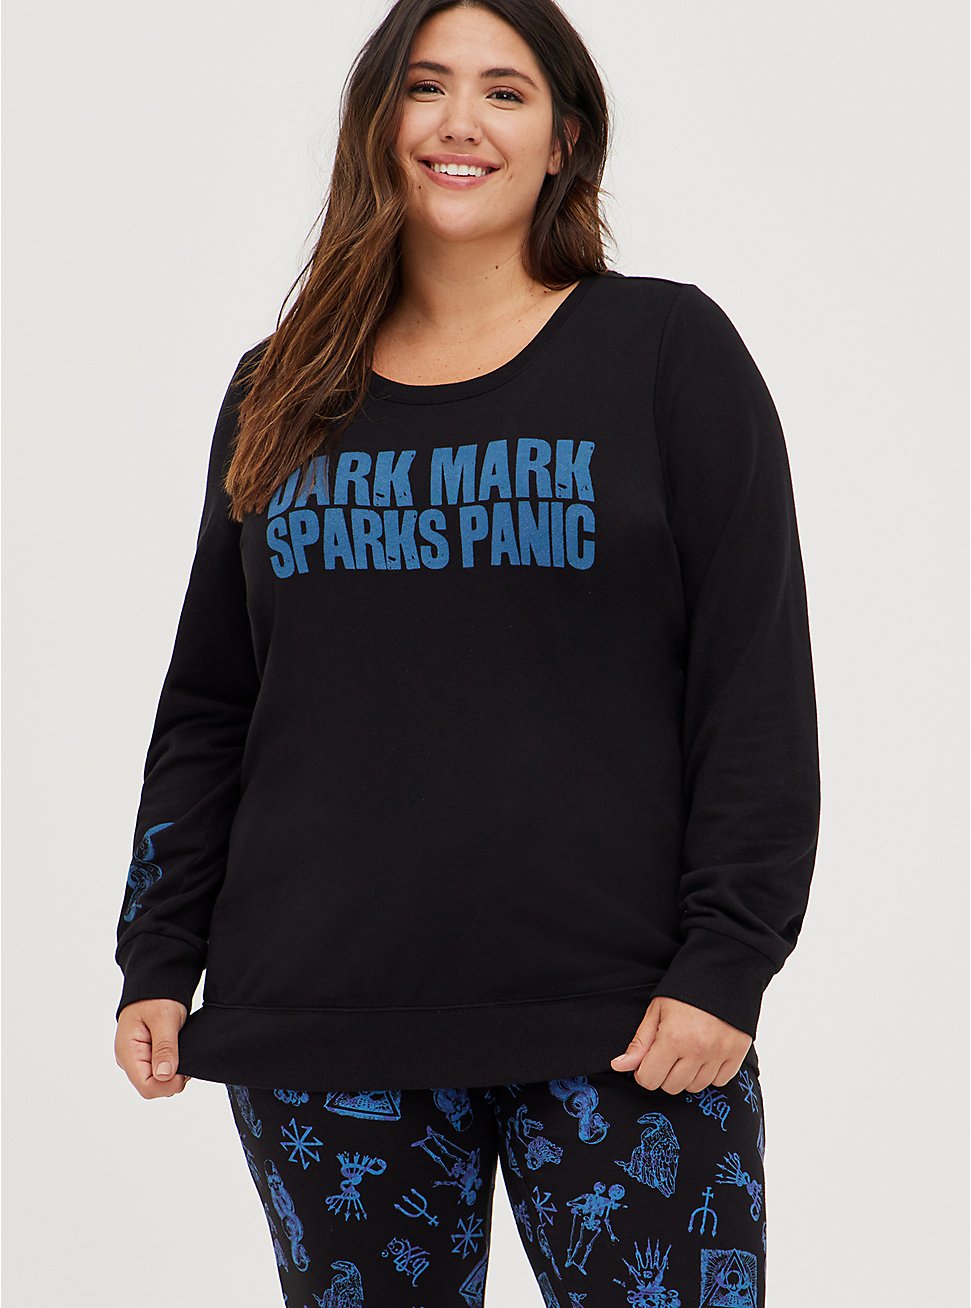 Plus Size Strappy Sweatshirt - Harry Potter Dark Mark, DEEP BLACK, hi-res